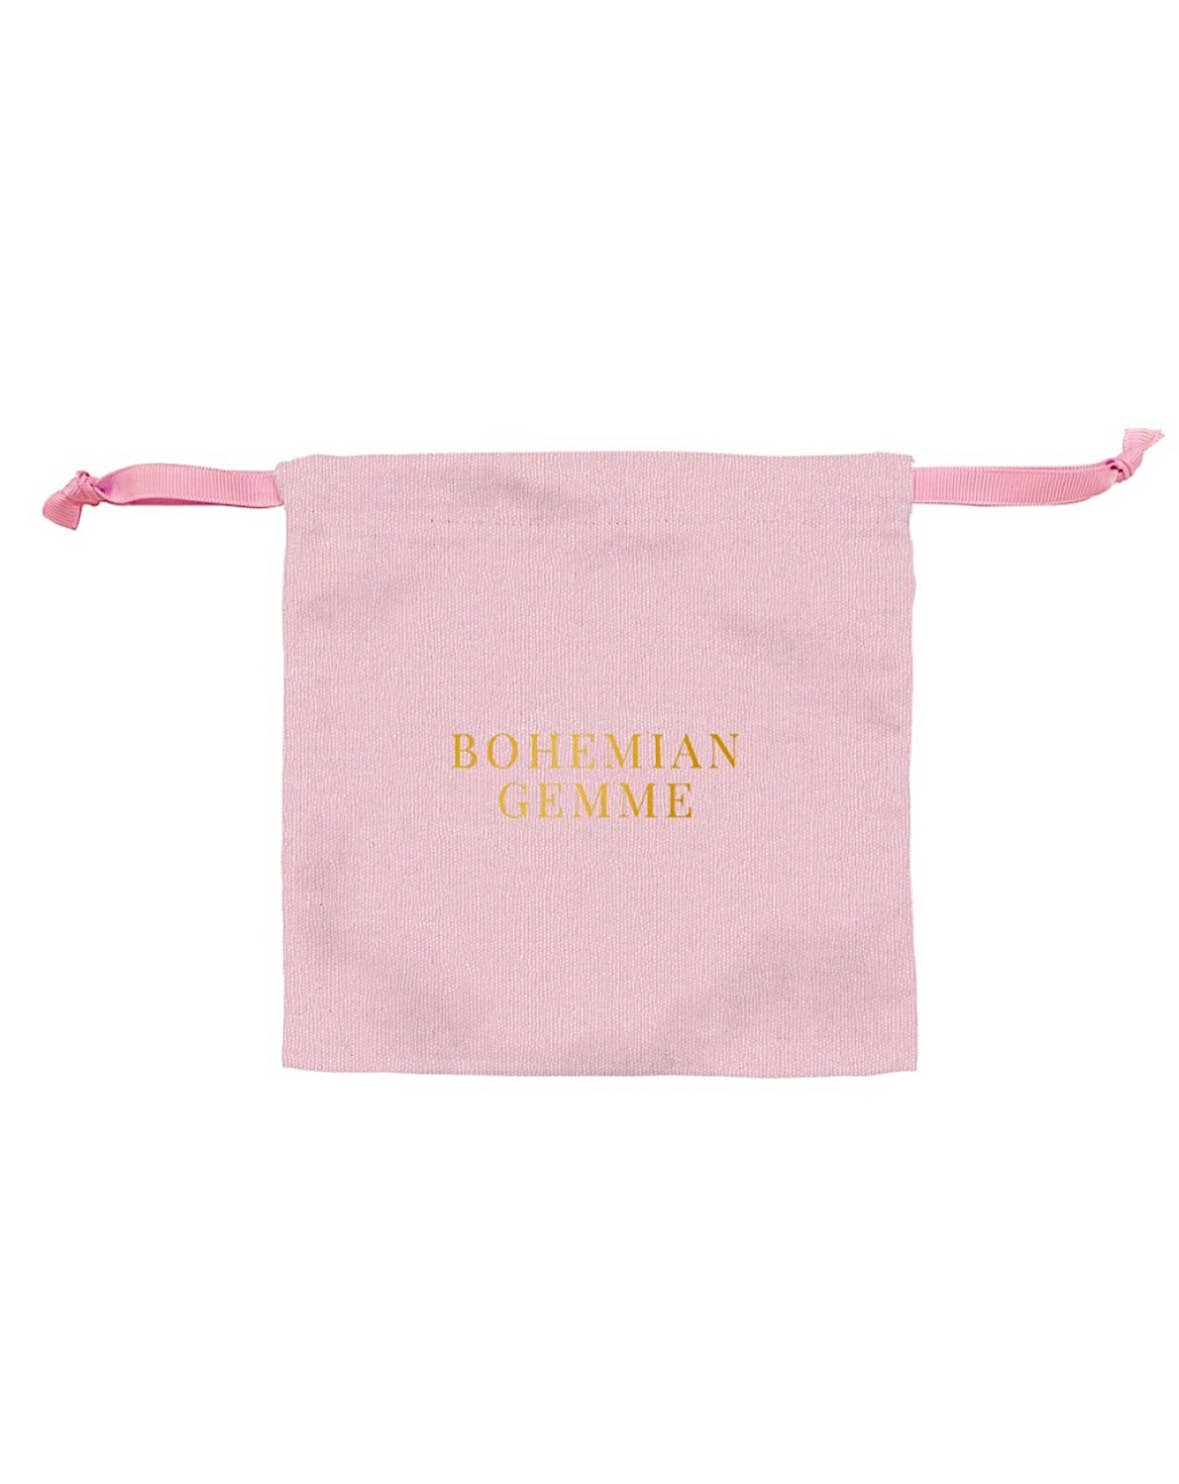 BOHEMIAN GEMME - Signature Bohemian Gemme Headband Dust Bag